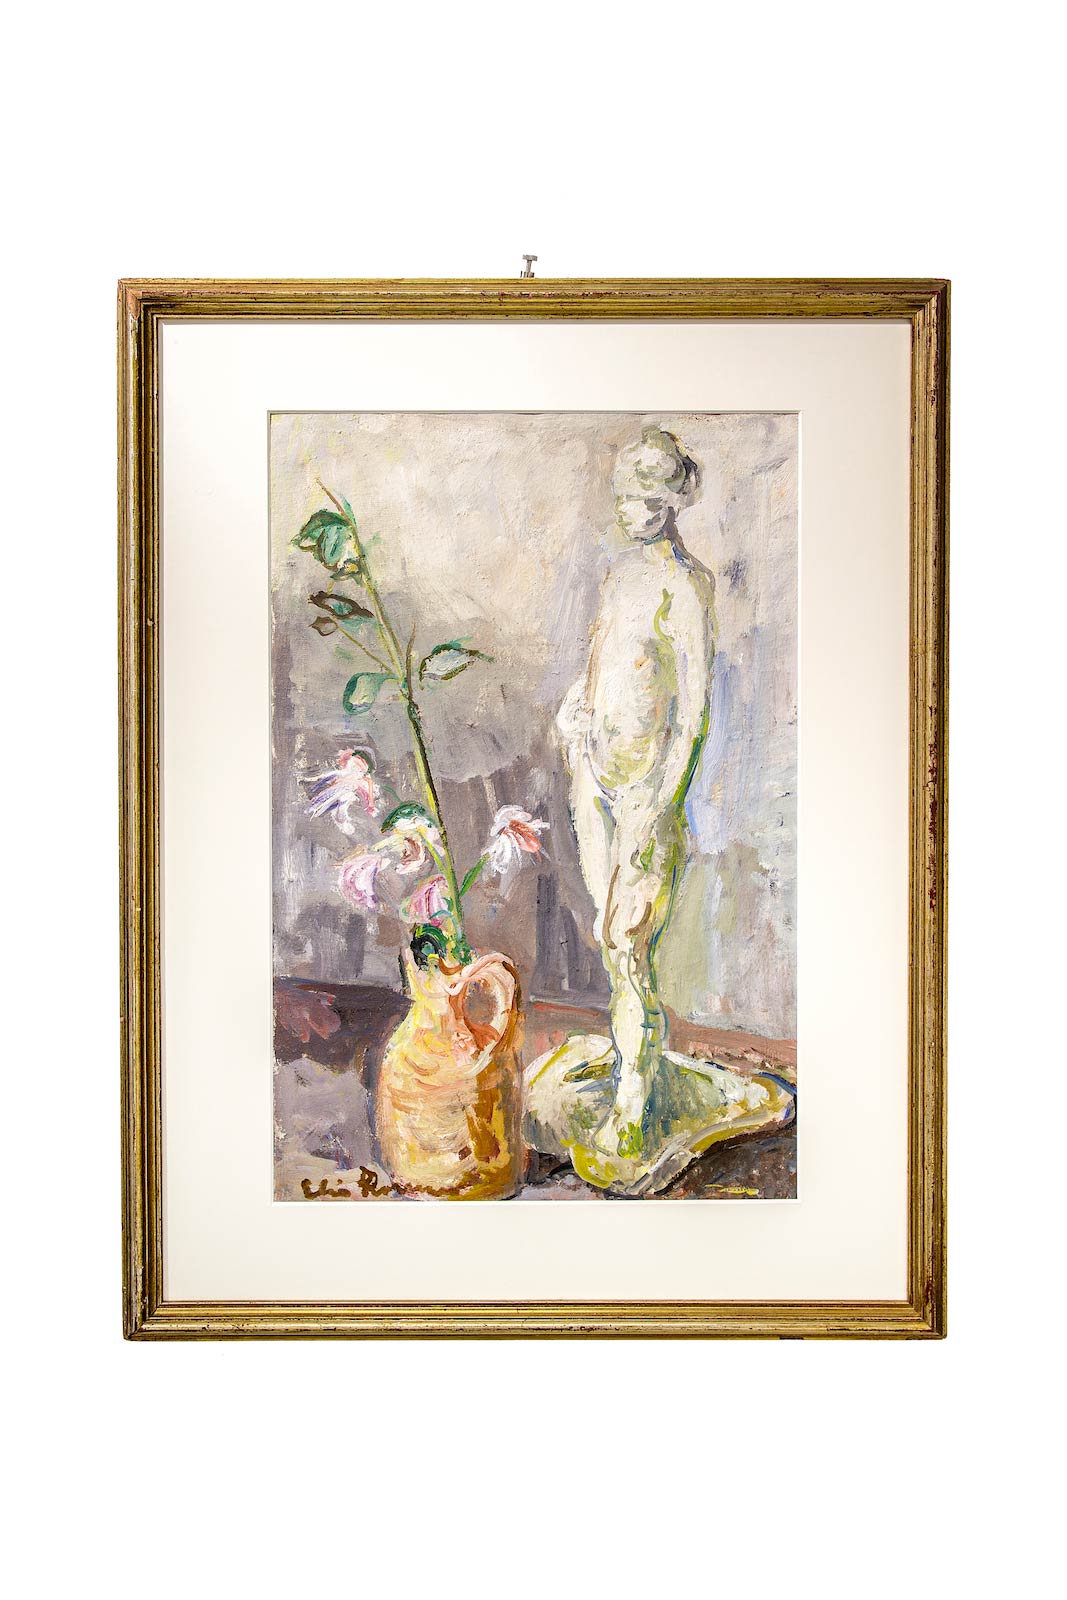 Elio Romano (Trapani, 1909 – Catania, 1996). Still life with a Statua. 56x40, Oil painting on